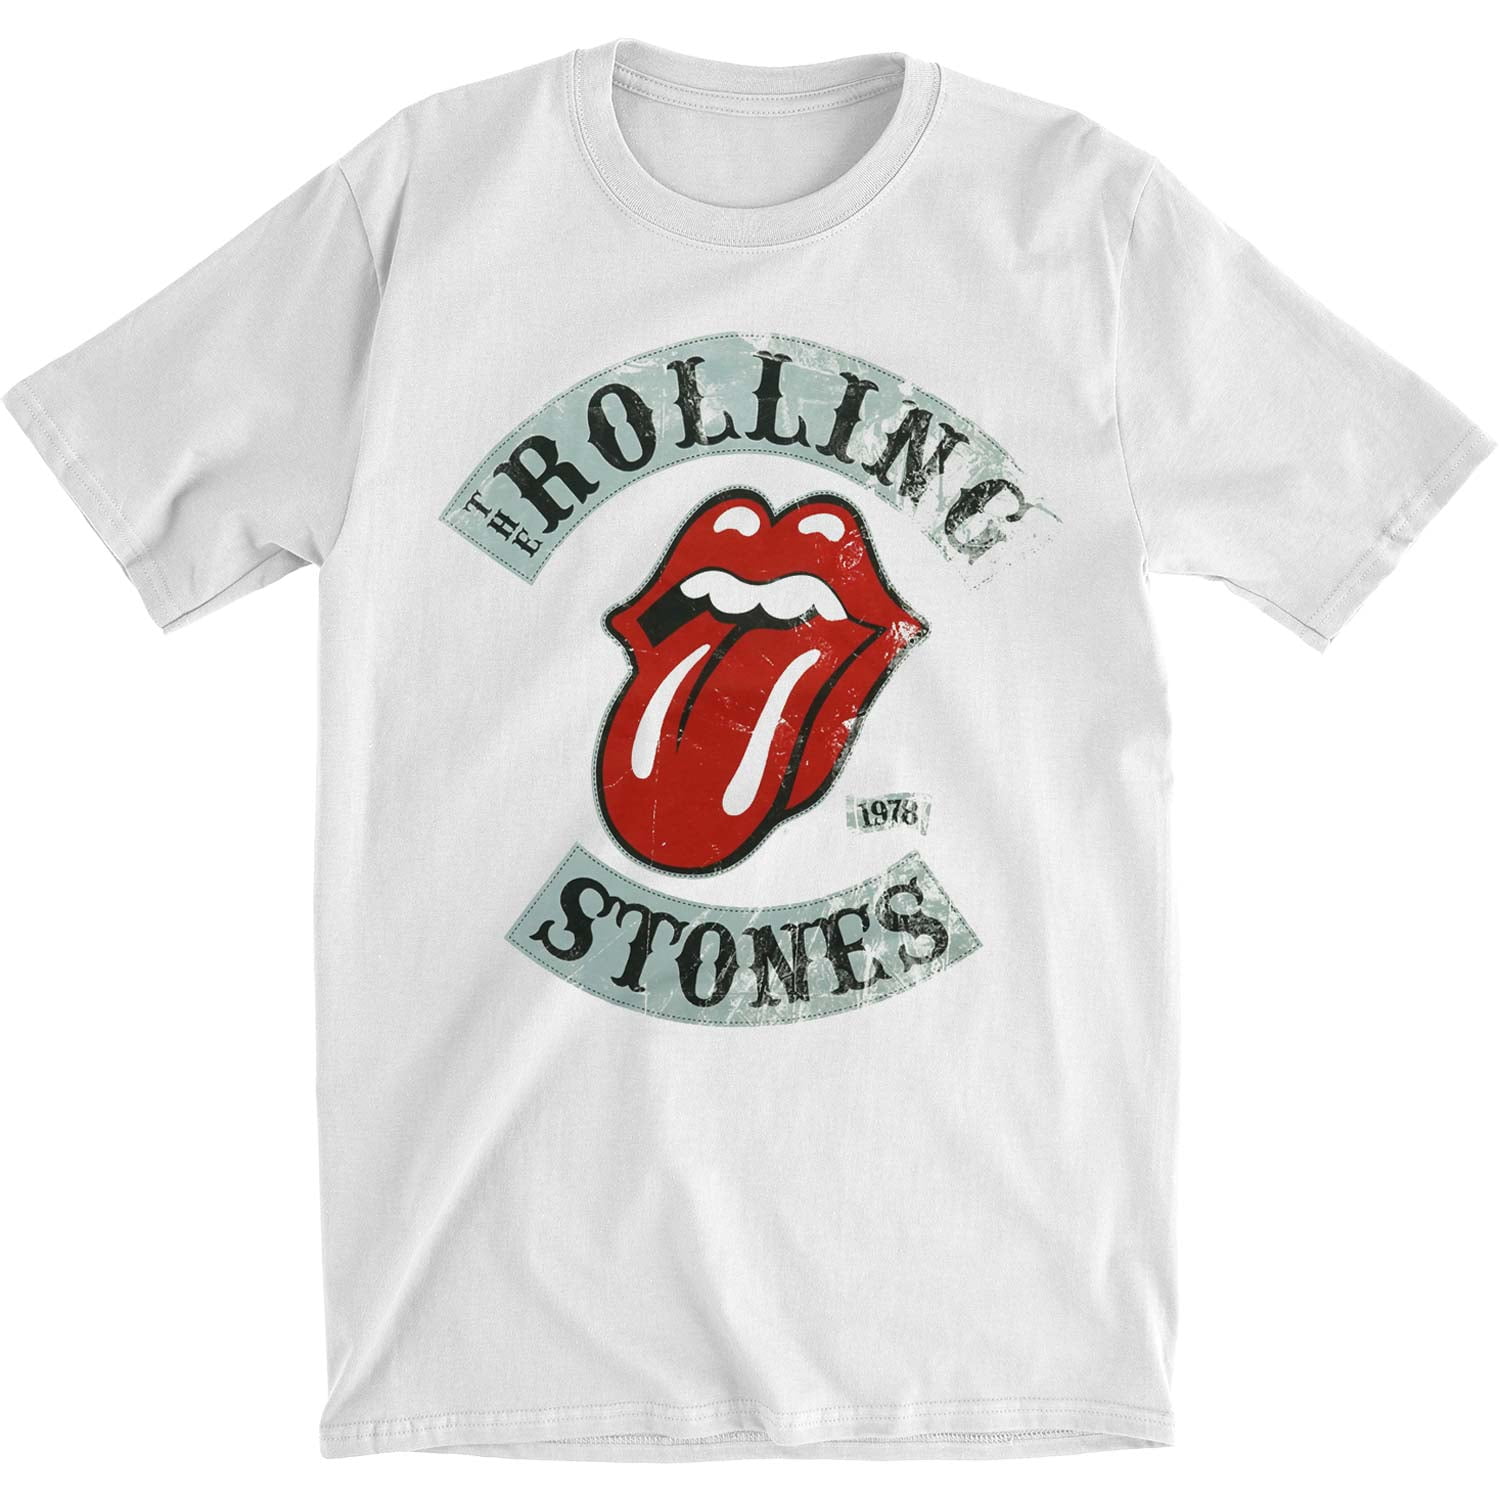 rolling stones t shirt walmart